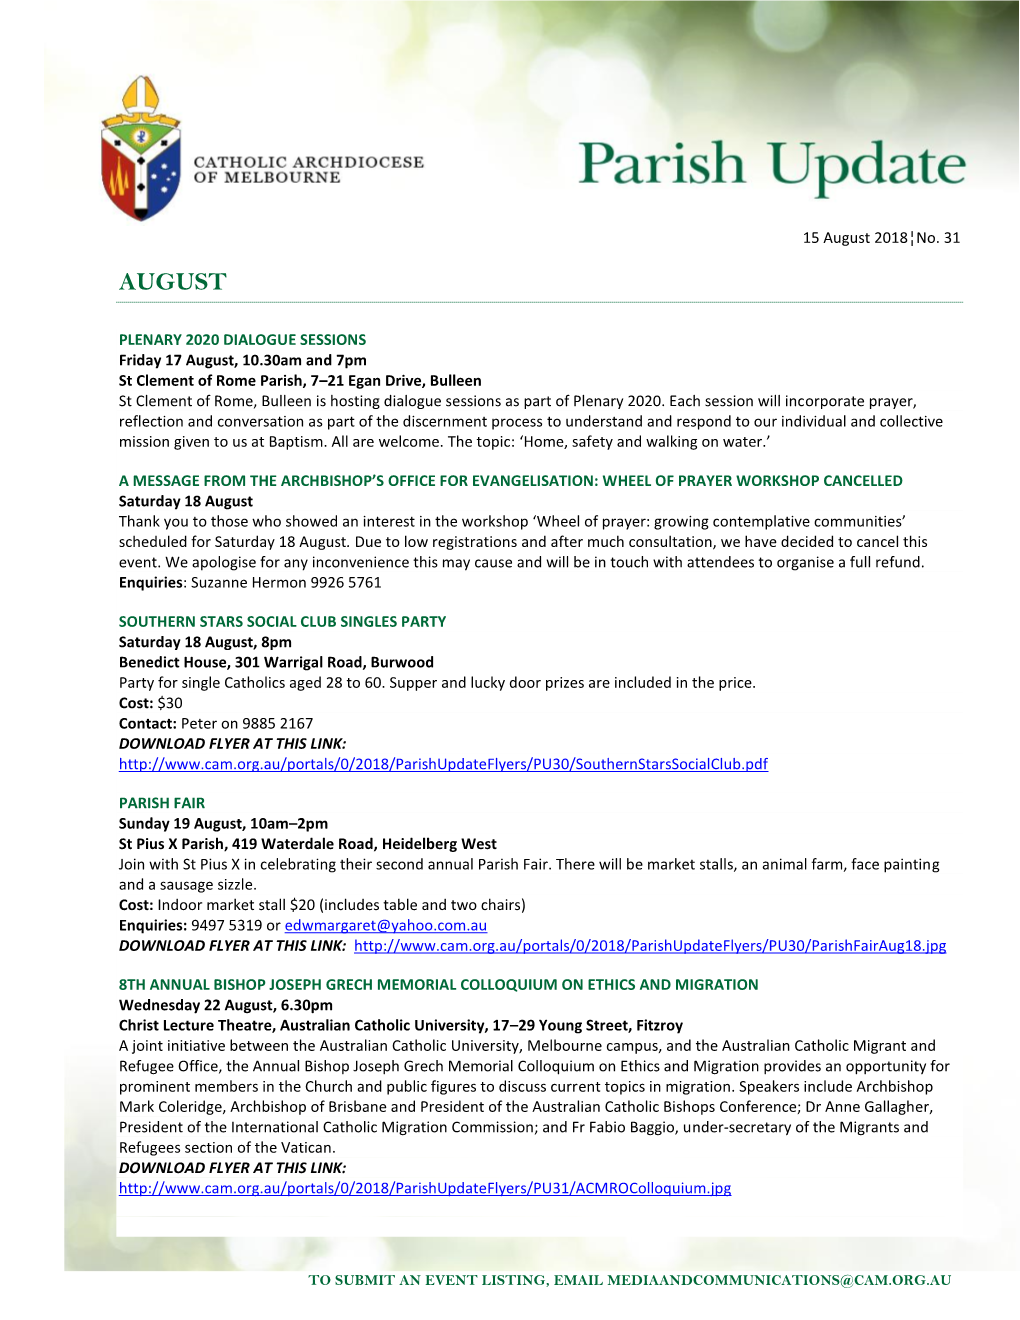 Parish Update Template